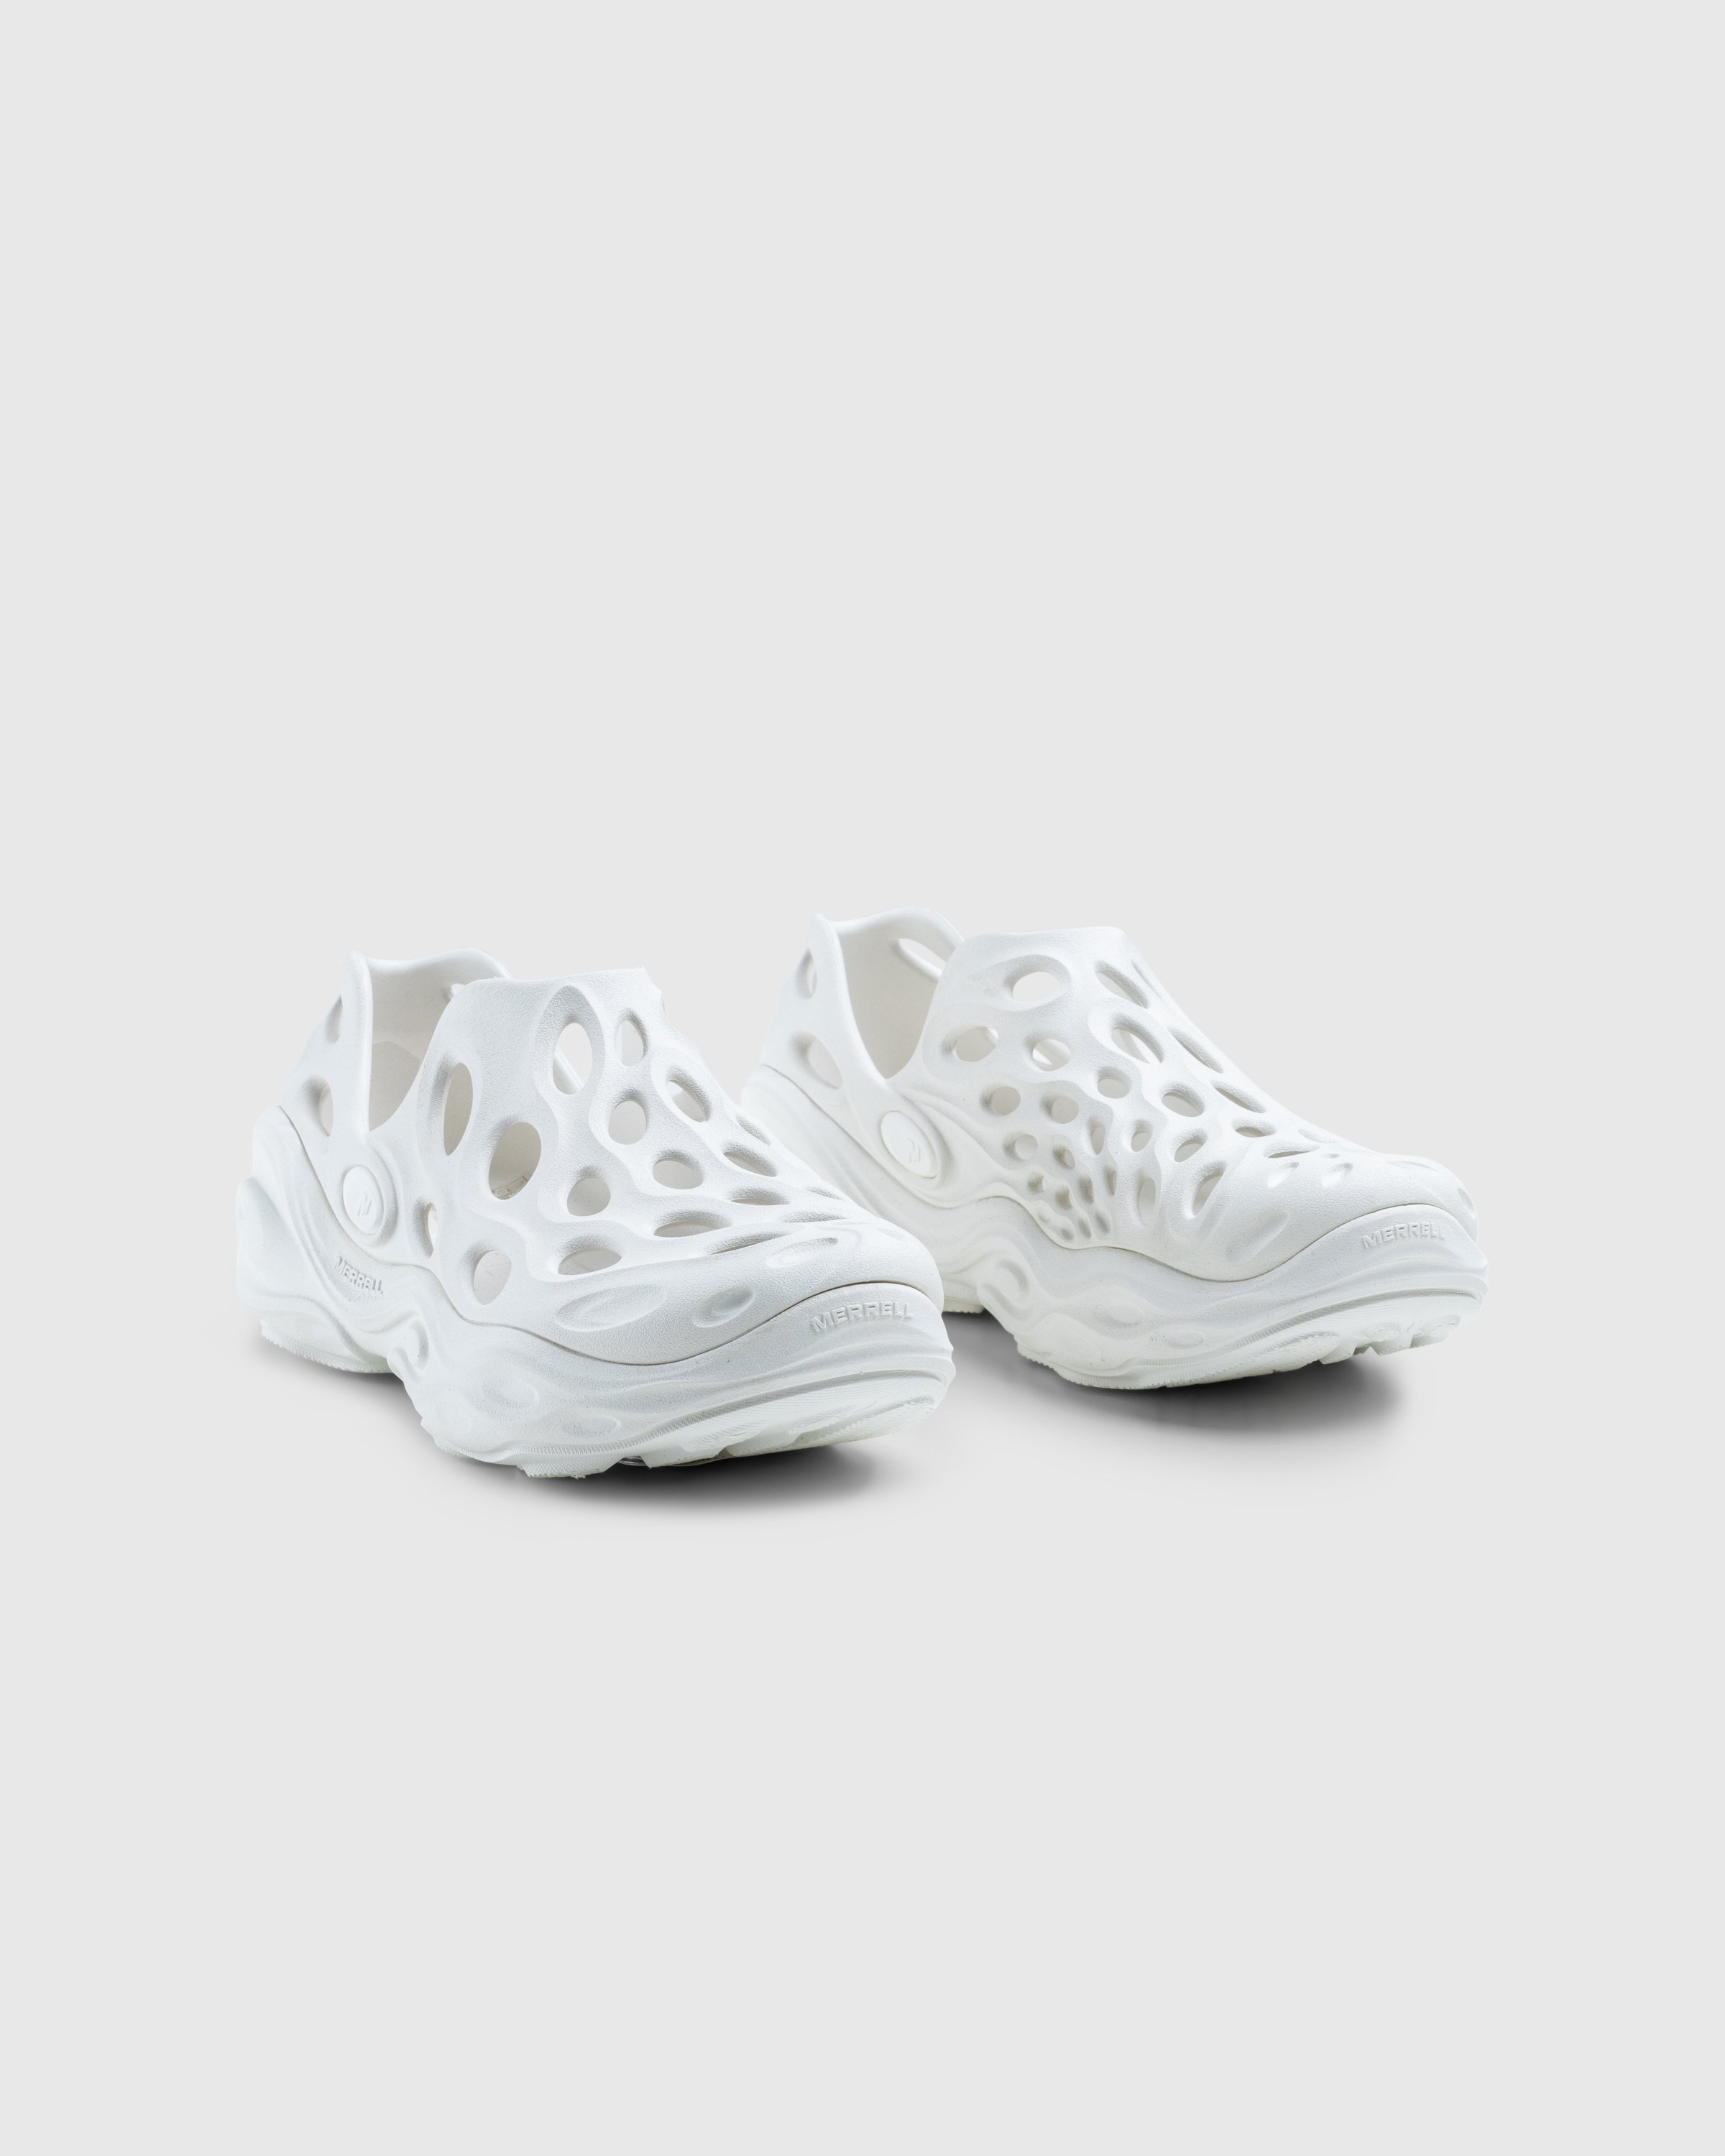 Merrell - HYDRO NEXT GEN MOC SE/TRIPLE WHITE - Footwear - White - Image 3